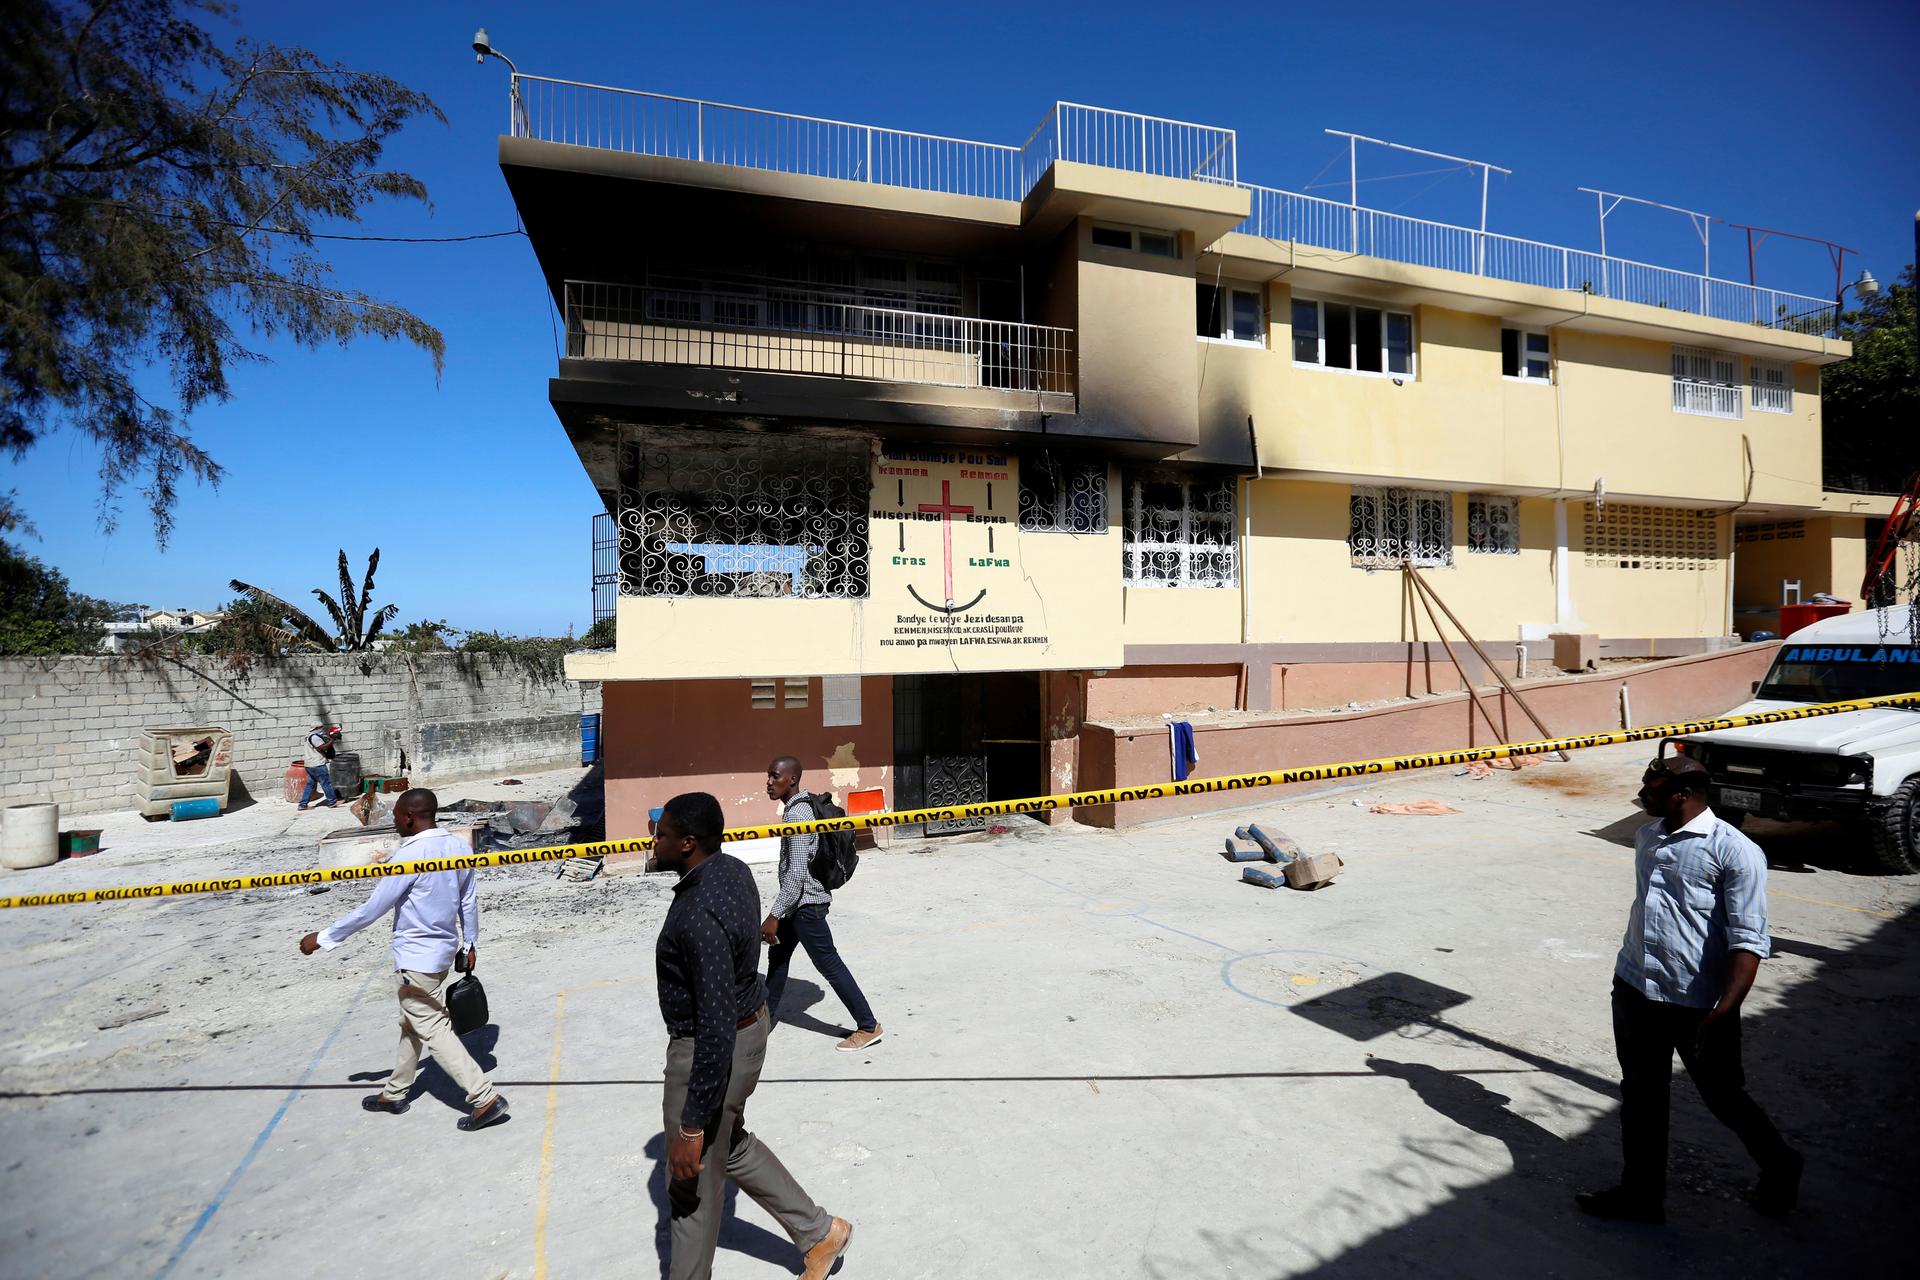 Haiti orphanage fire kills 15, renews debate over unlicensed orphanages